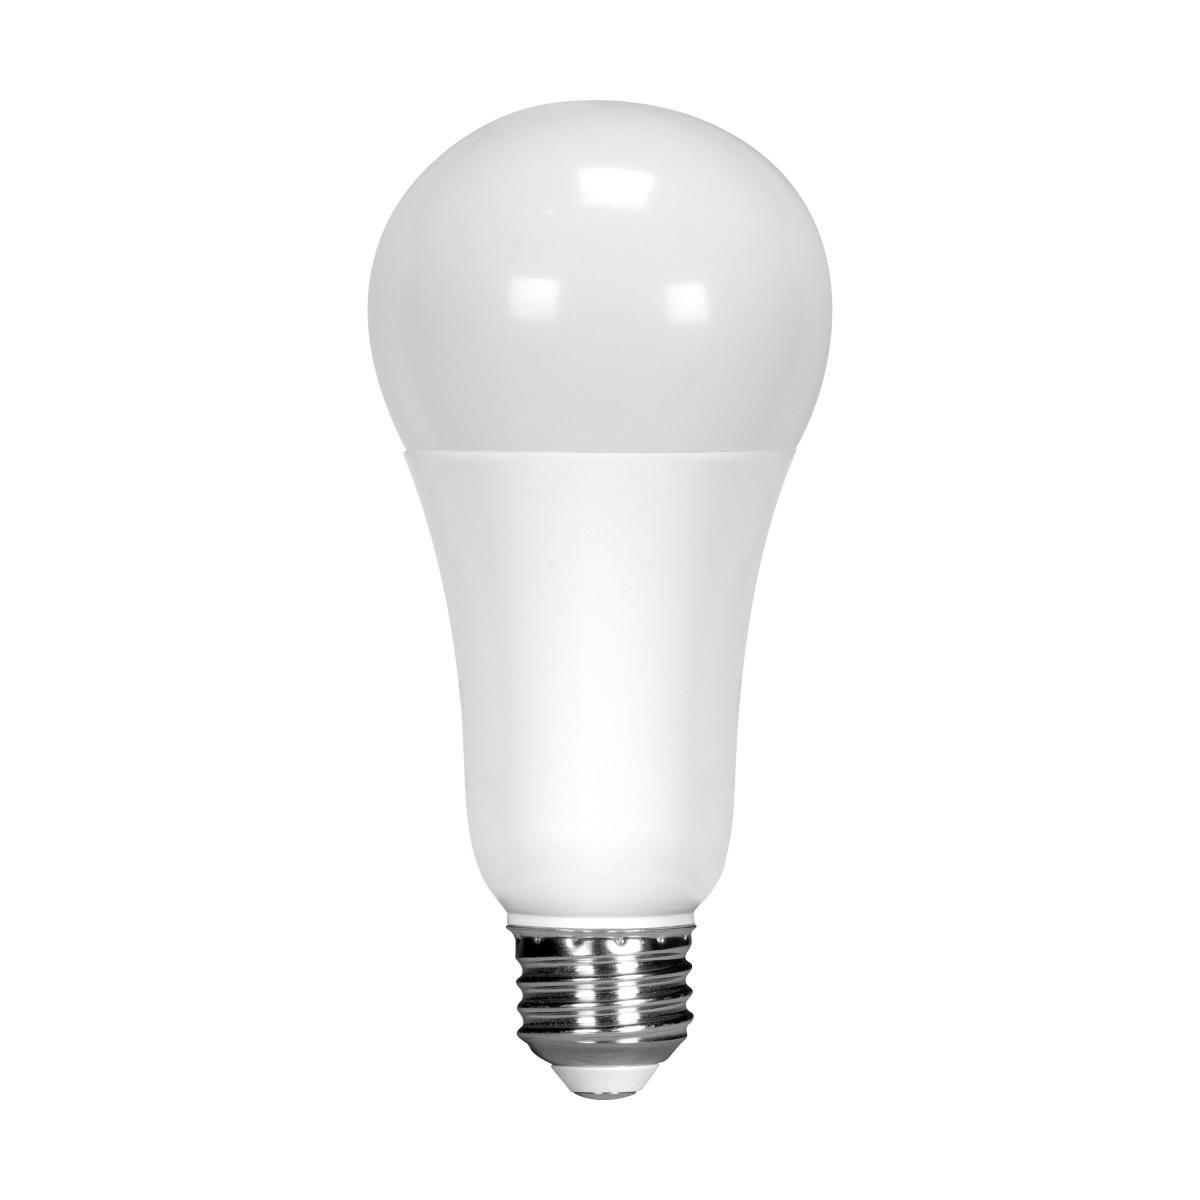 A19 LED Bulb, 100W Equivalent, 17 Watt, 1600 Lumens, 4000K, E26 Medium Base, Frosted Finish